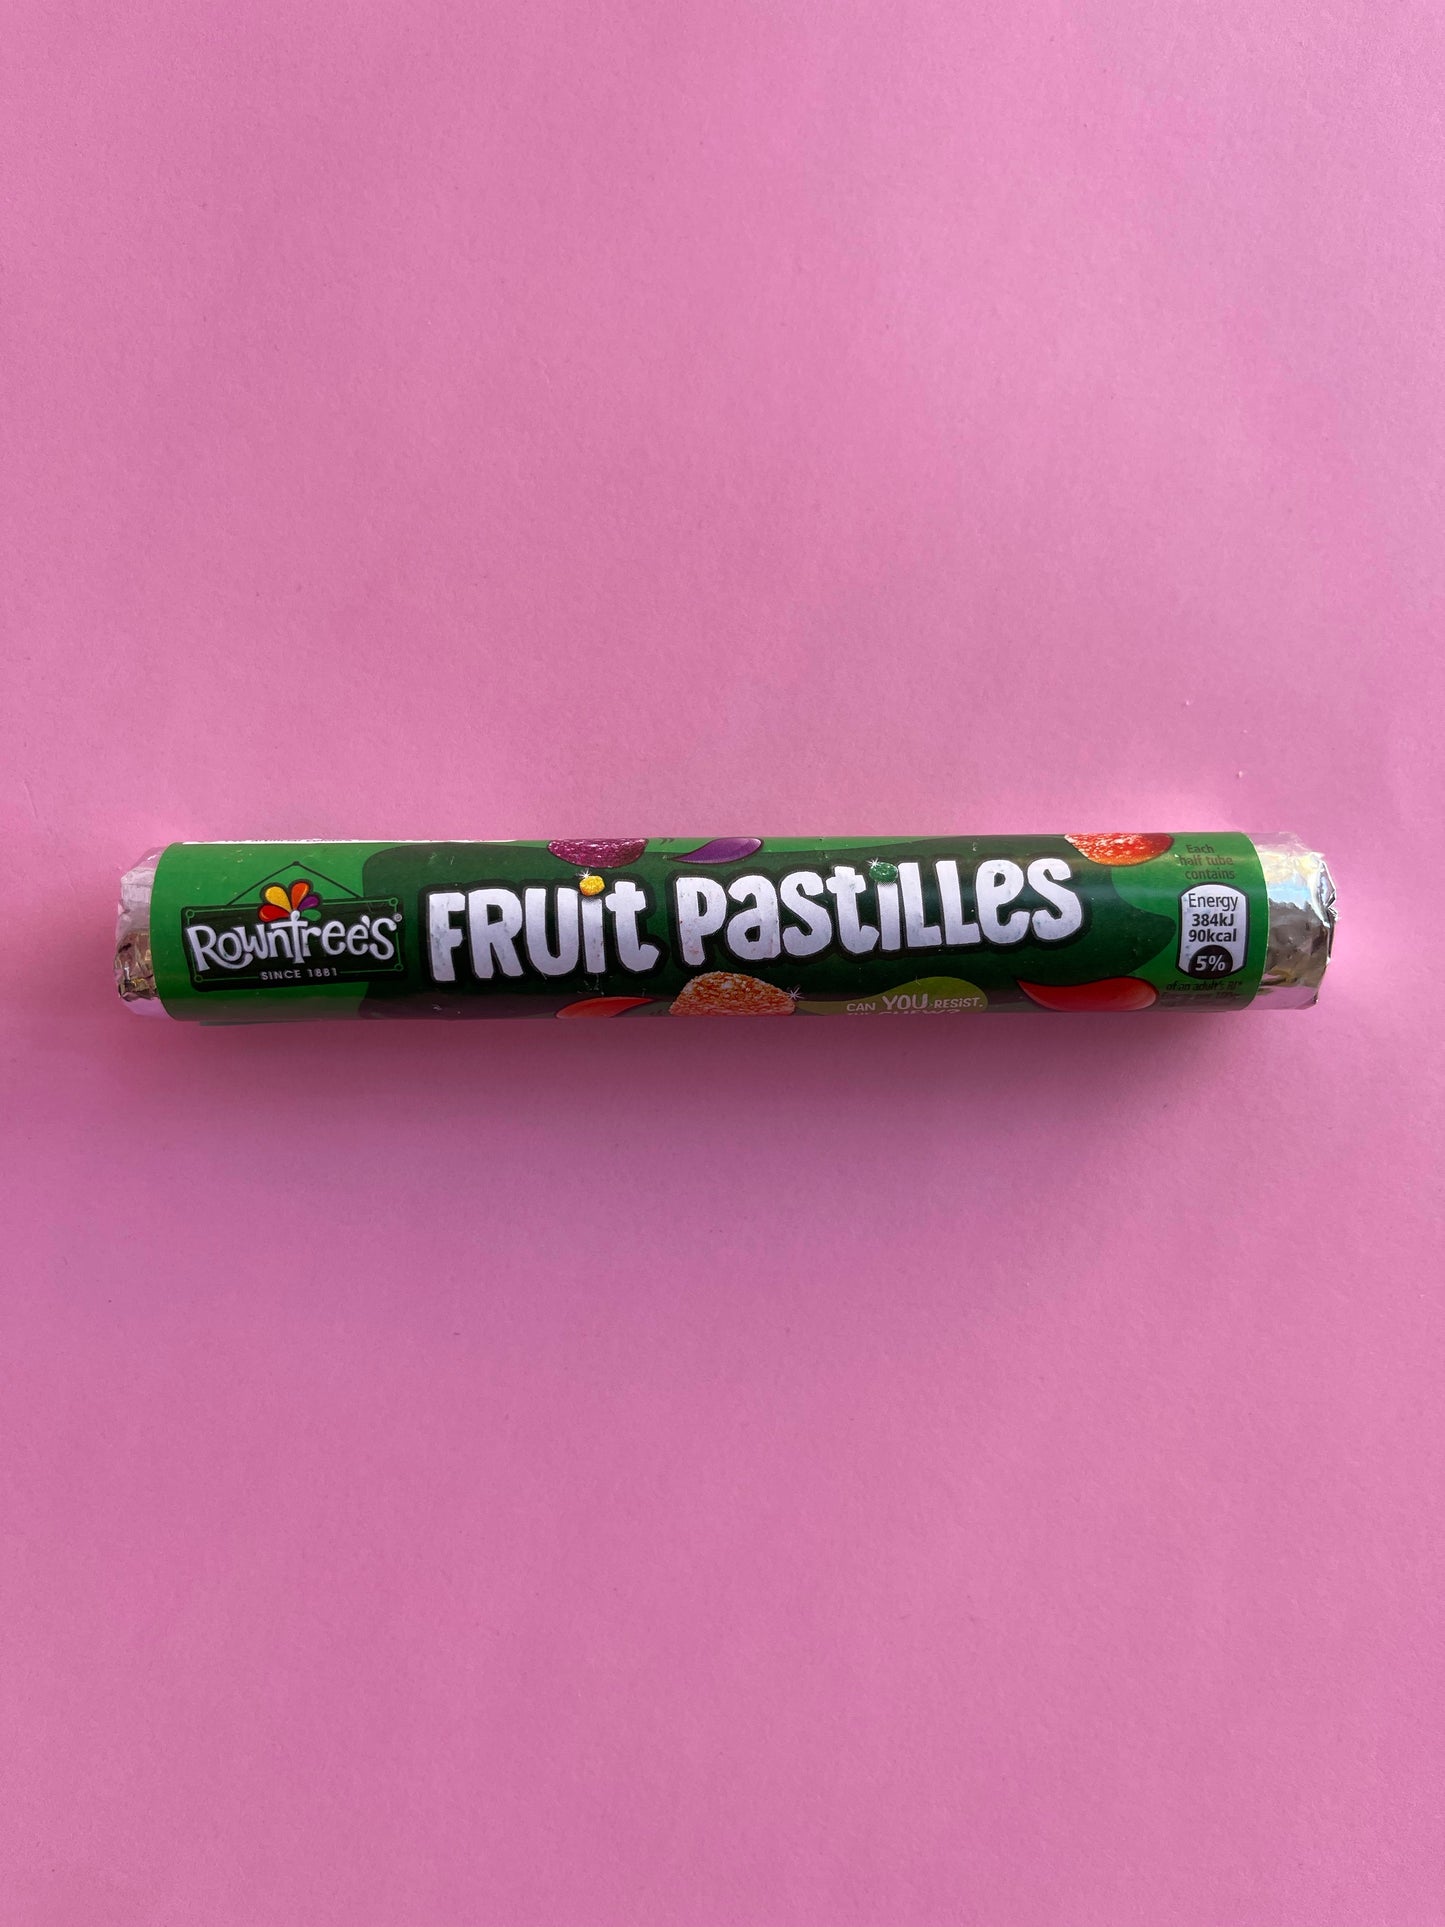 Rowntree’s Fruit Pastilles - now Vegan friendly!